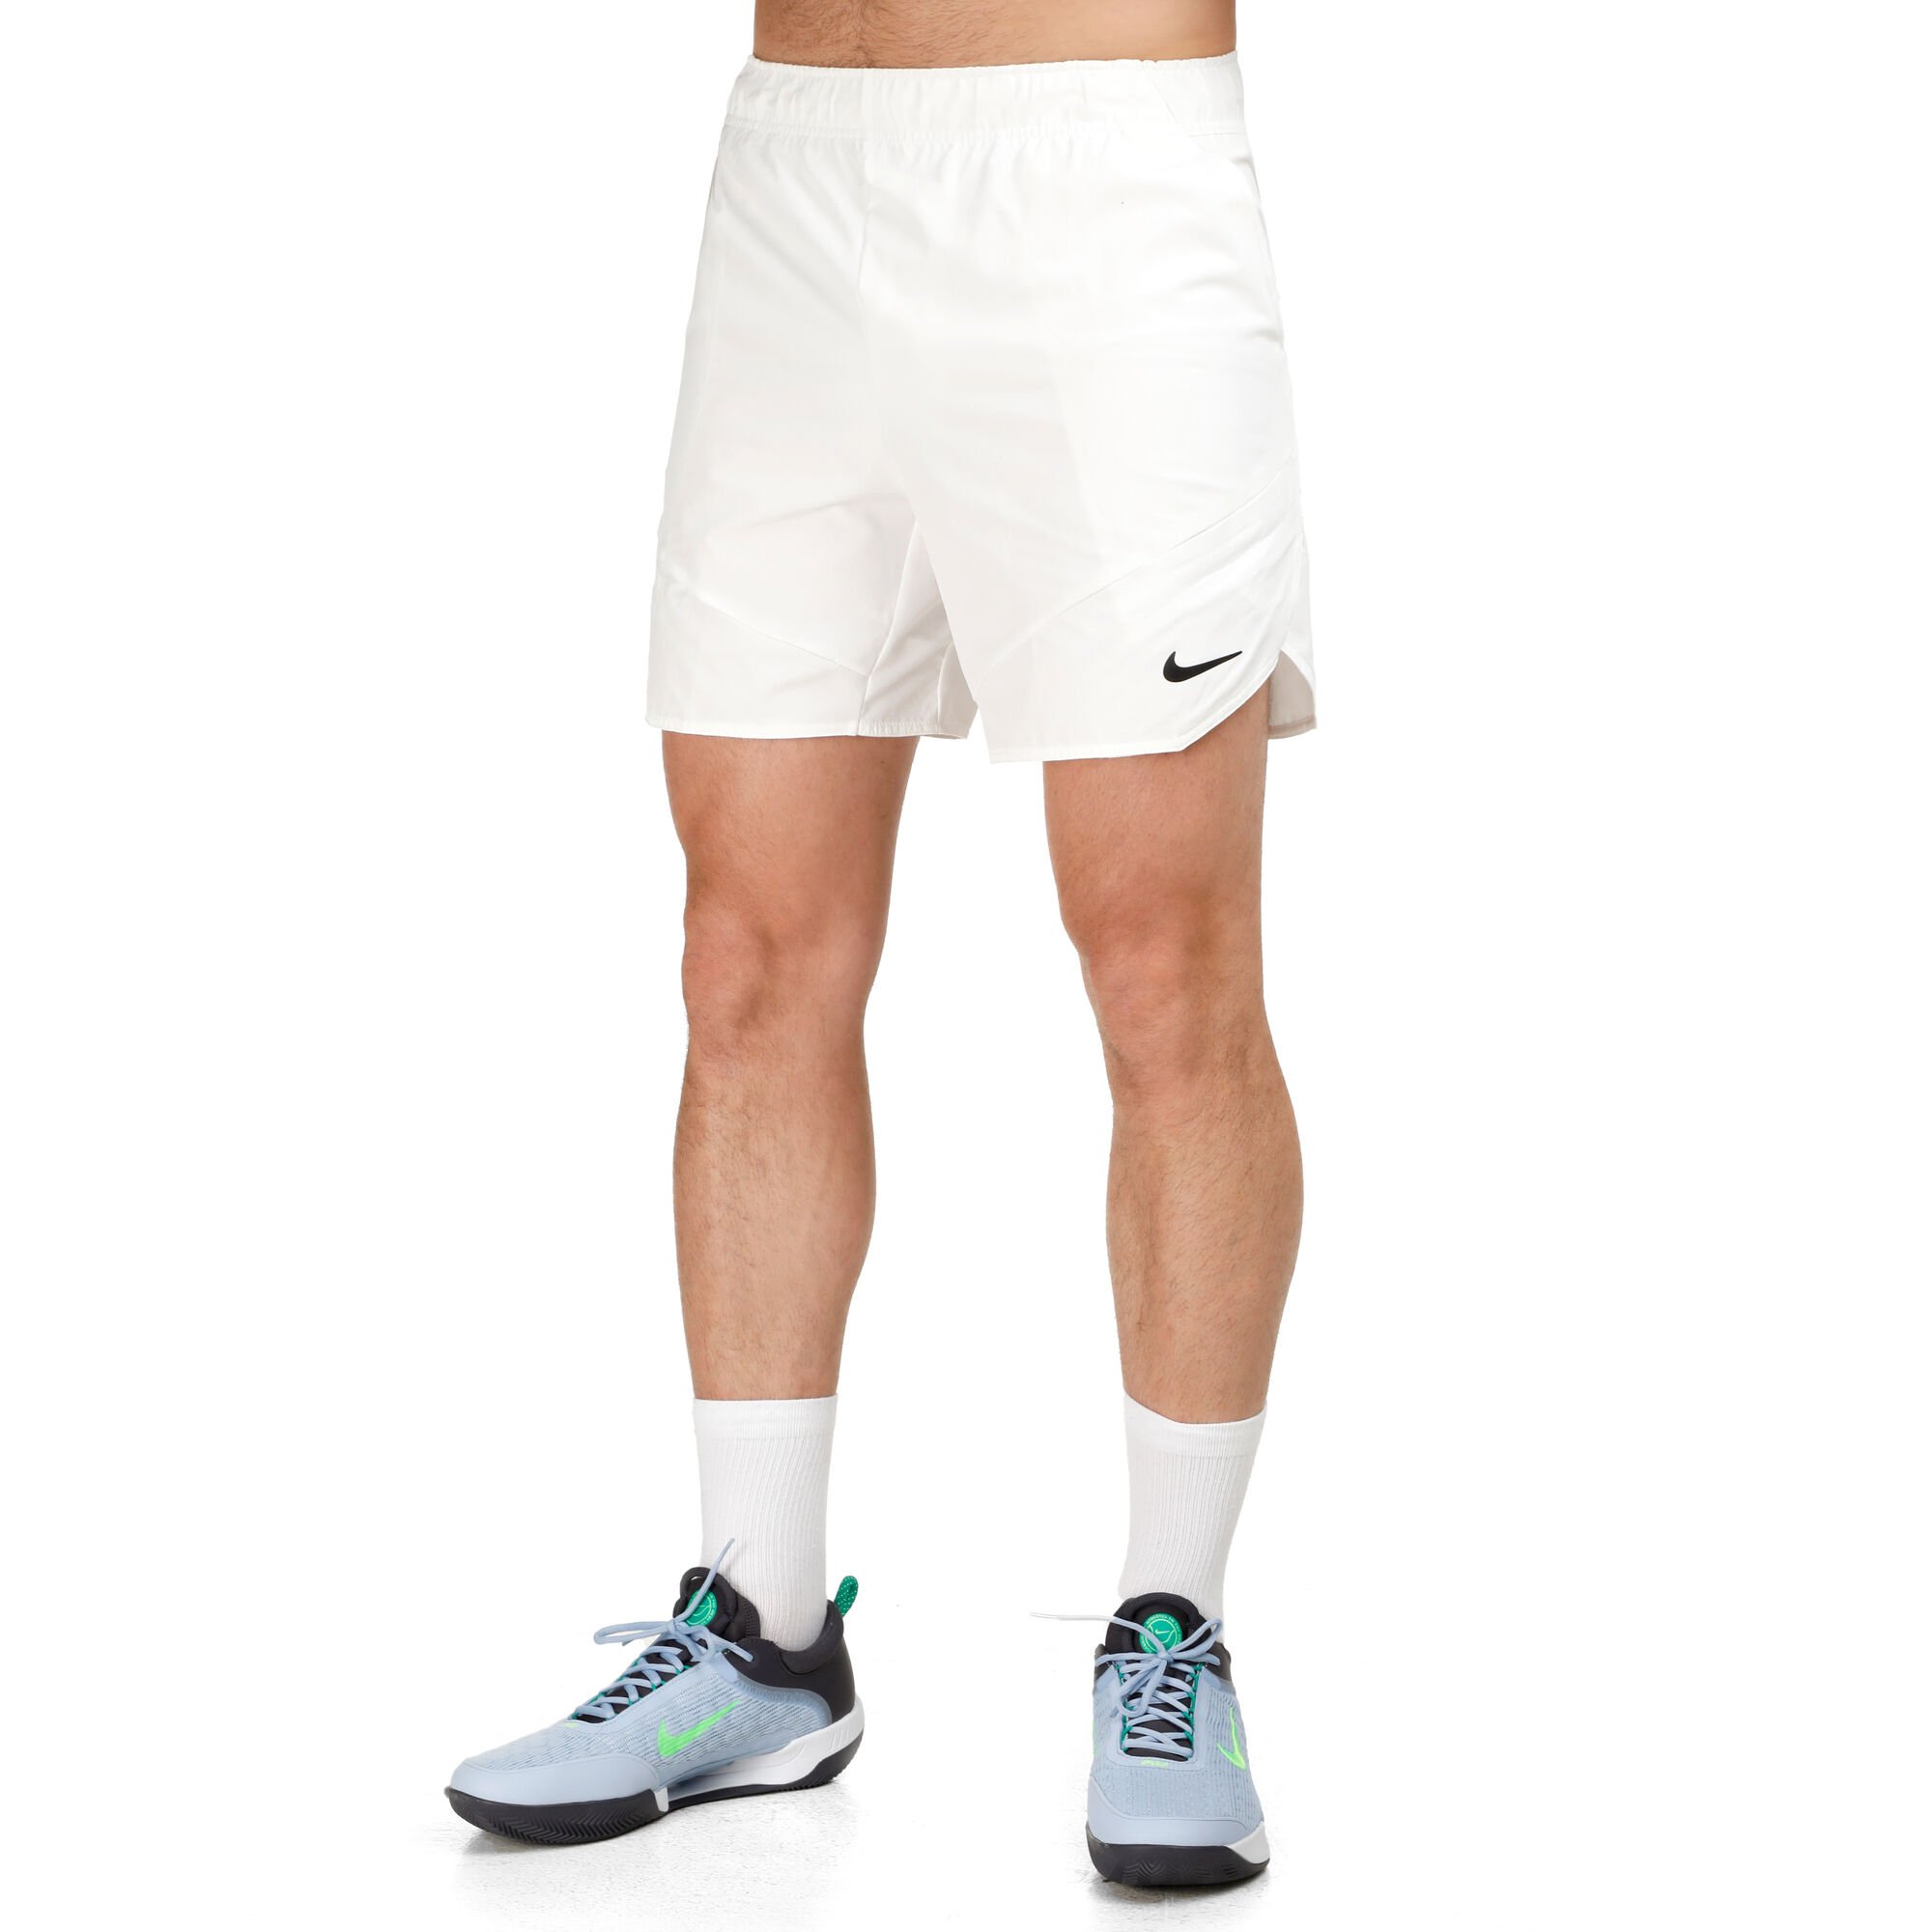 Buy Nike Dri-Fit Advantage 7in Shorts Men White online